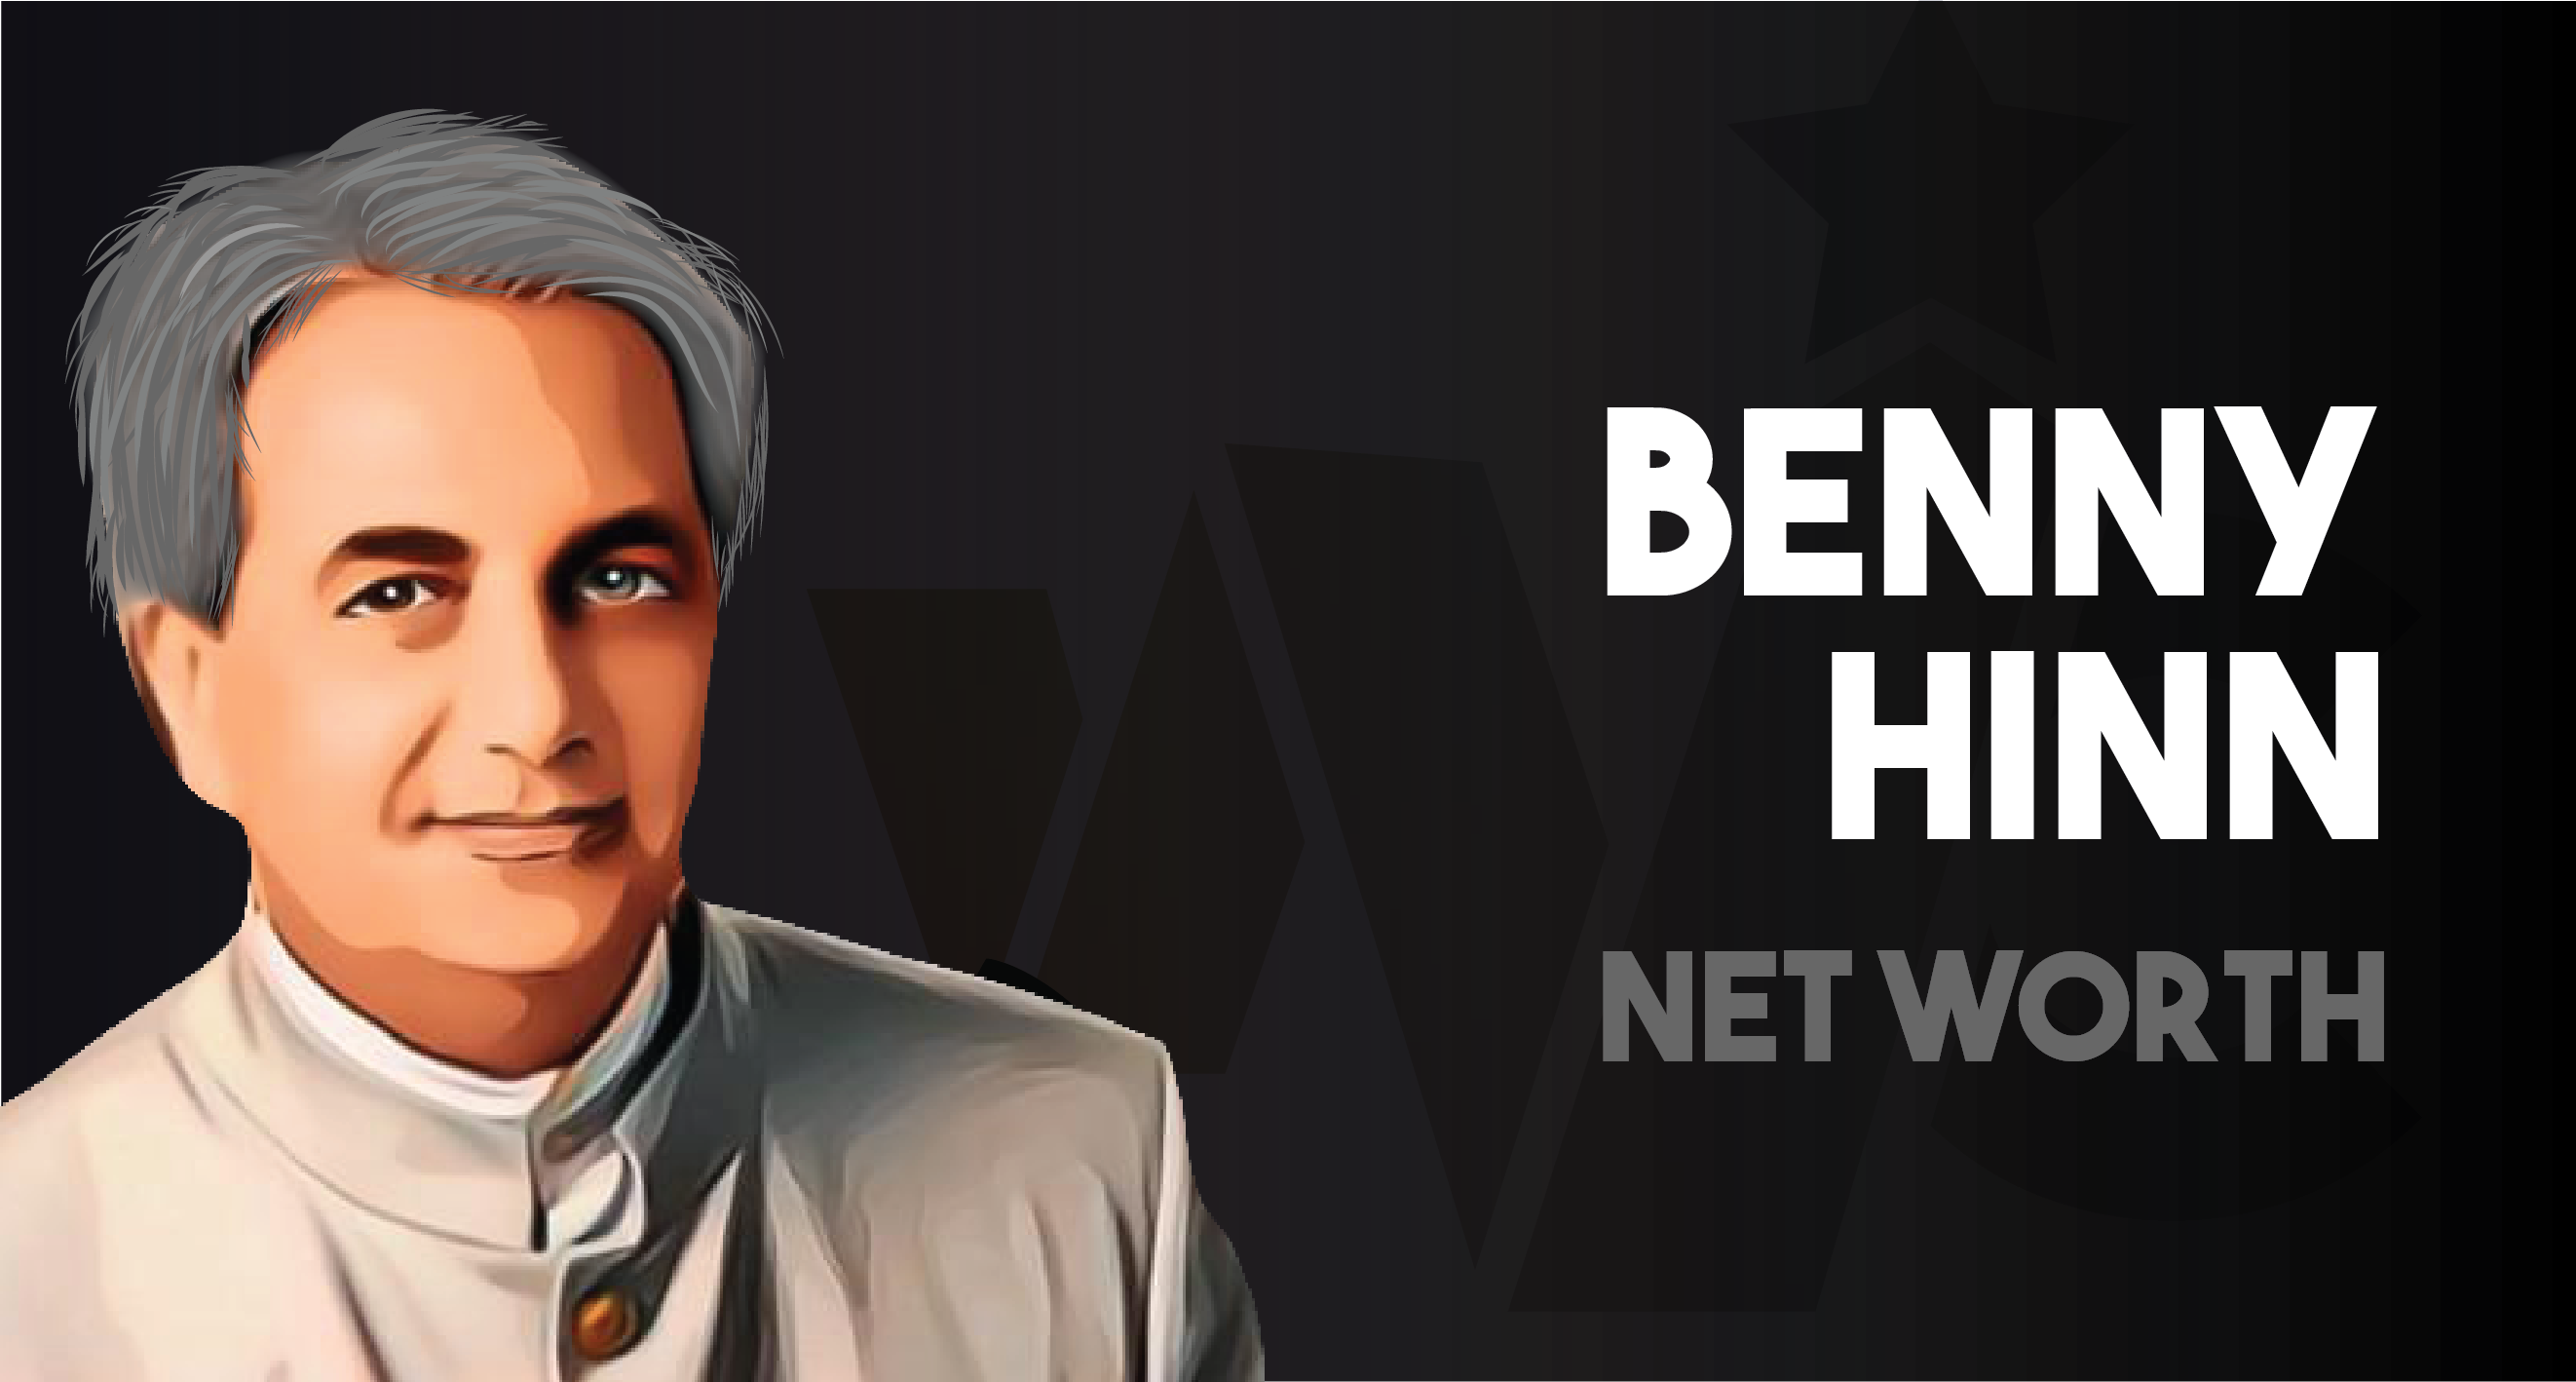 Benny Hinn - Net worth